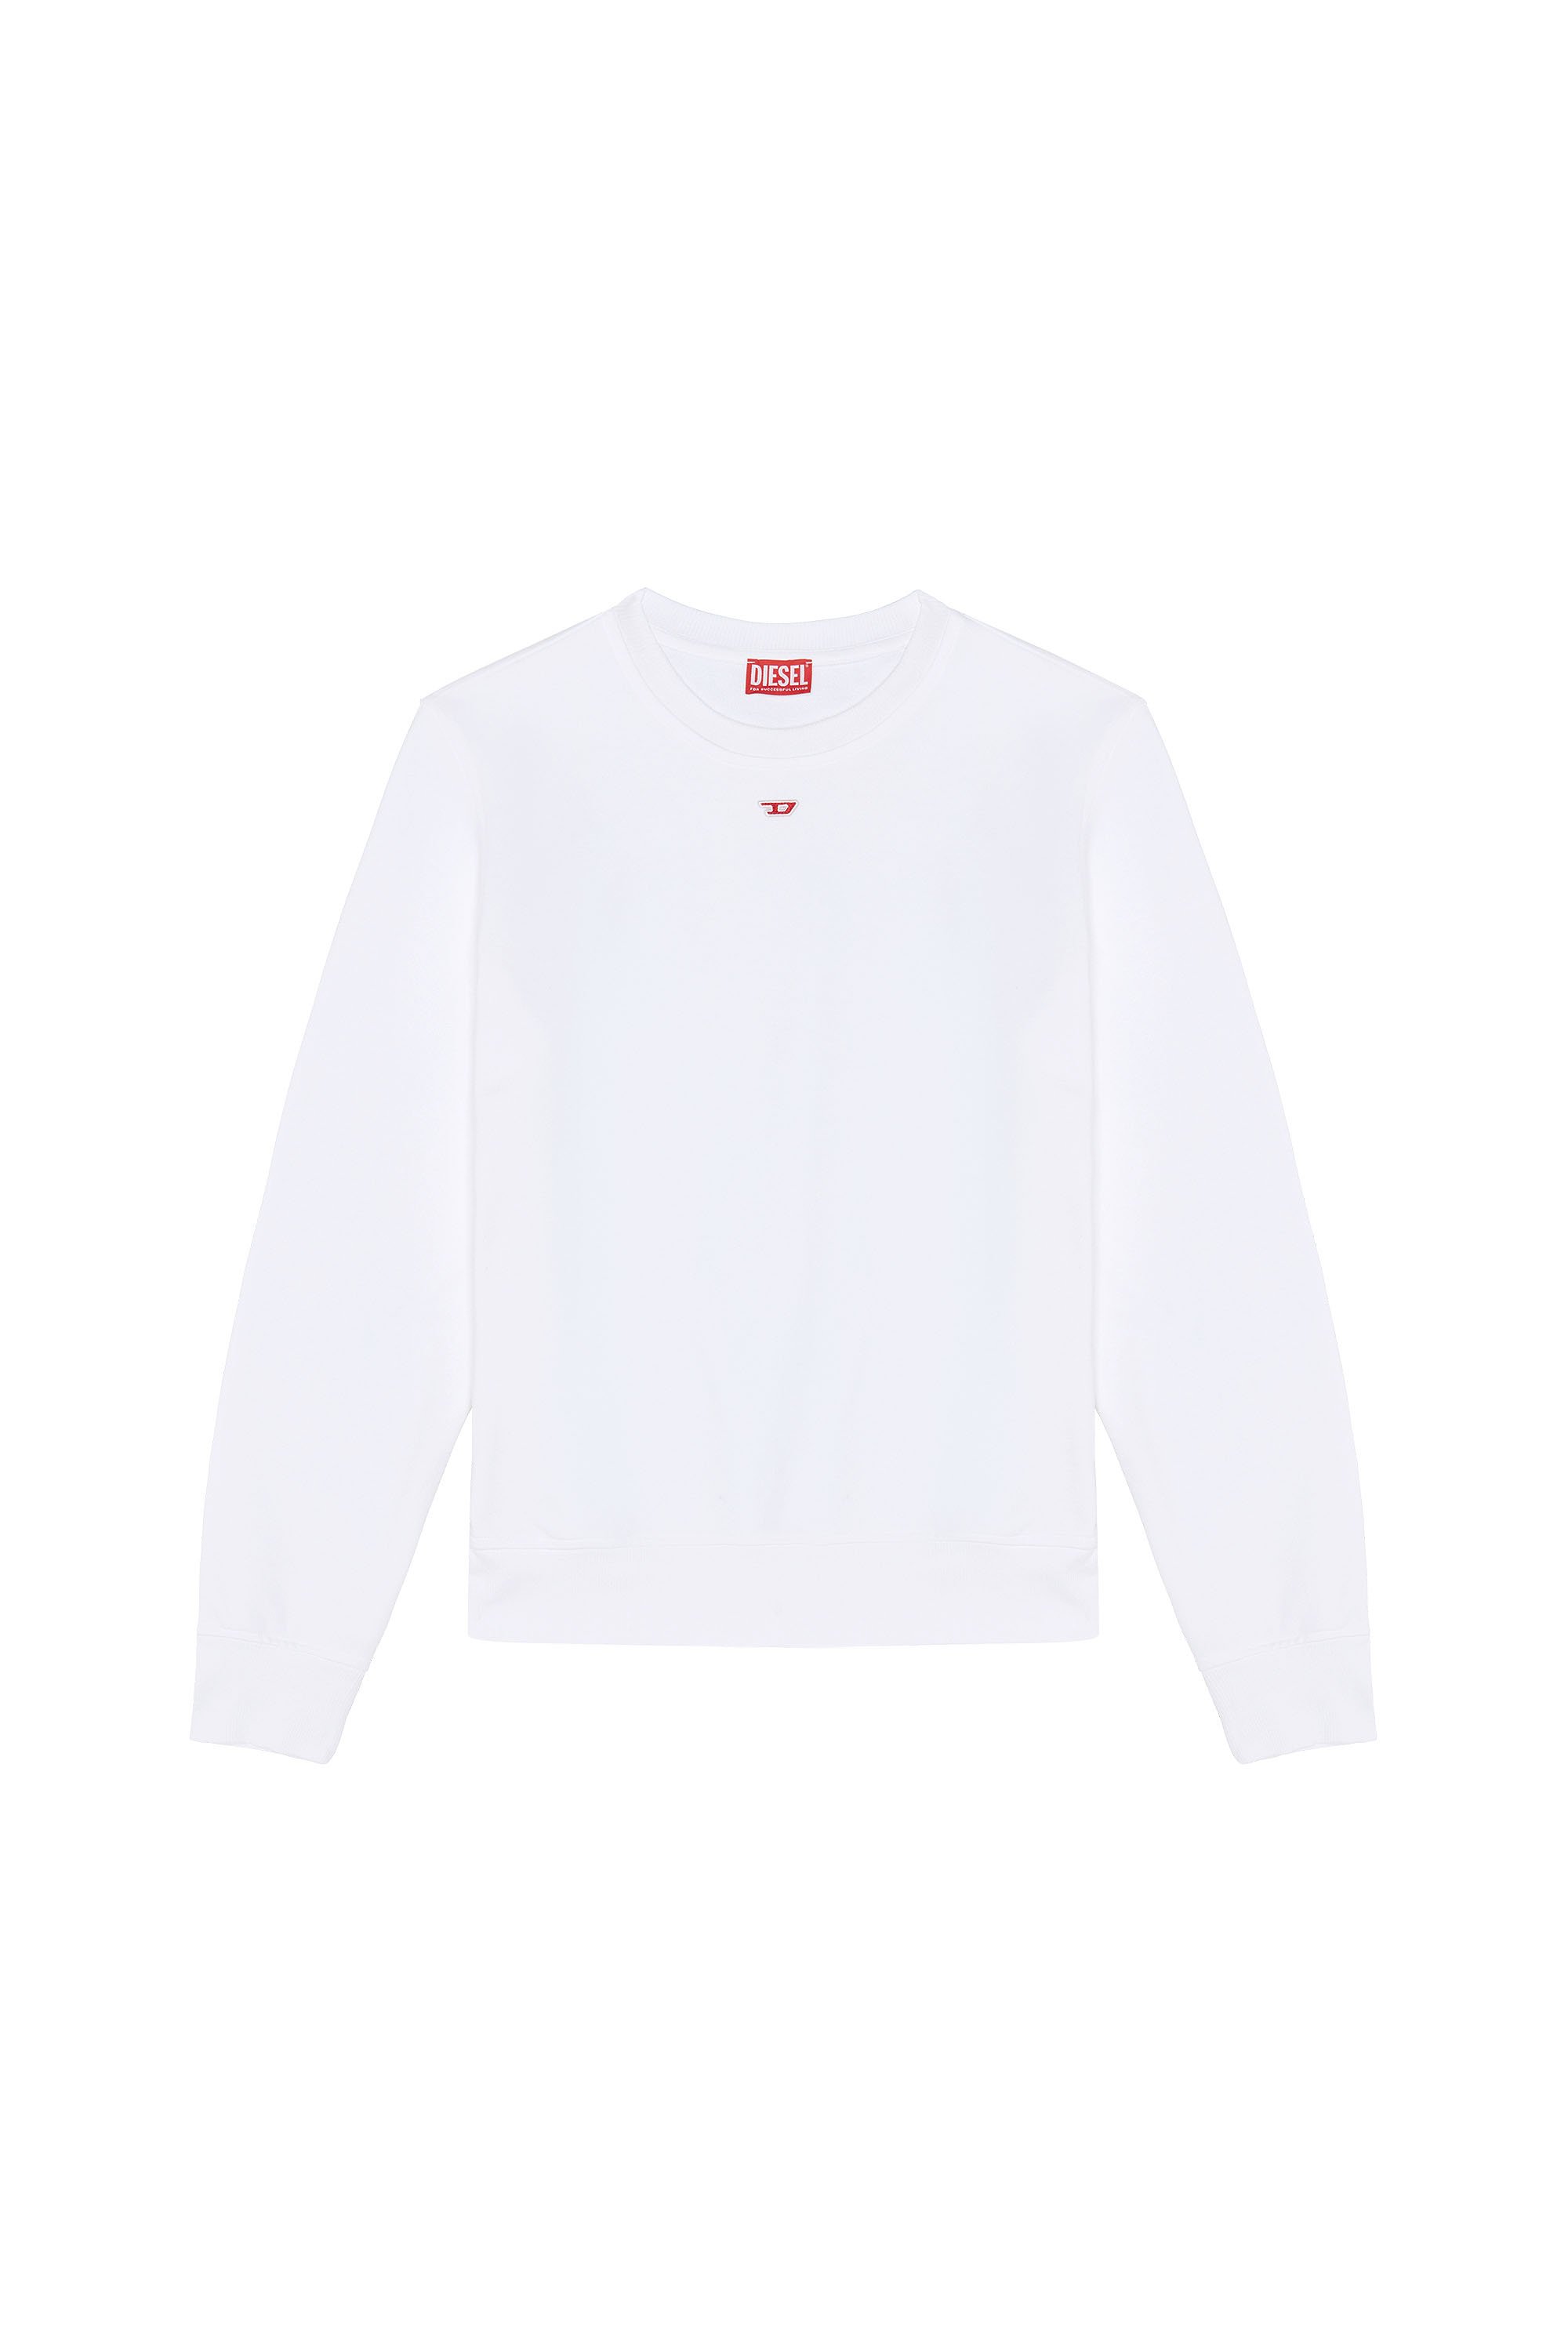 Diesel - S-GINN-D, Unisex Sweatshirt with mini D patch in White - Image 6